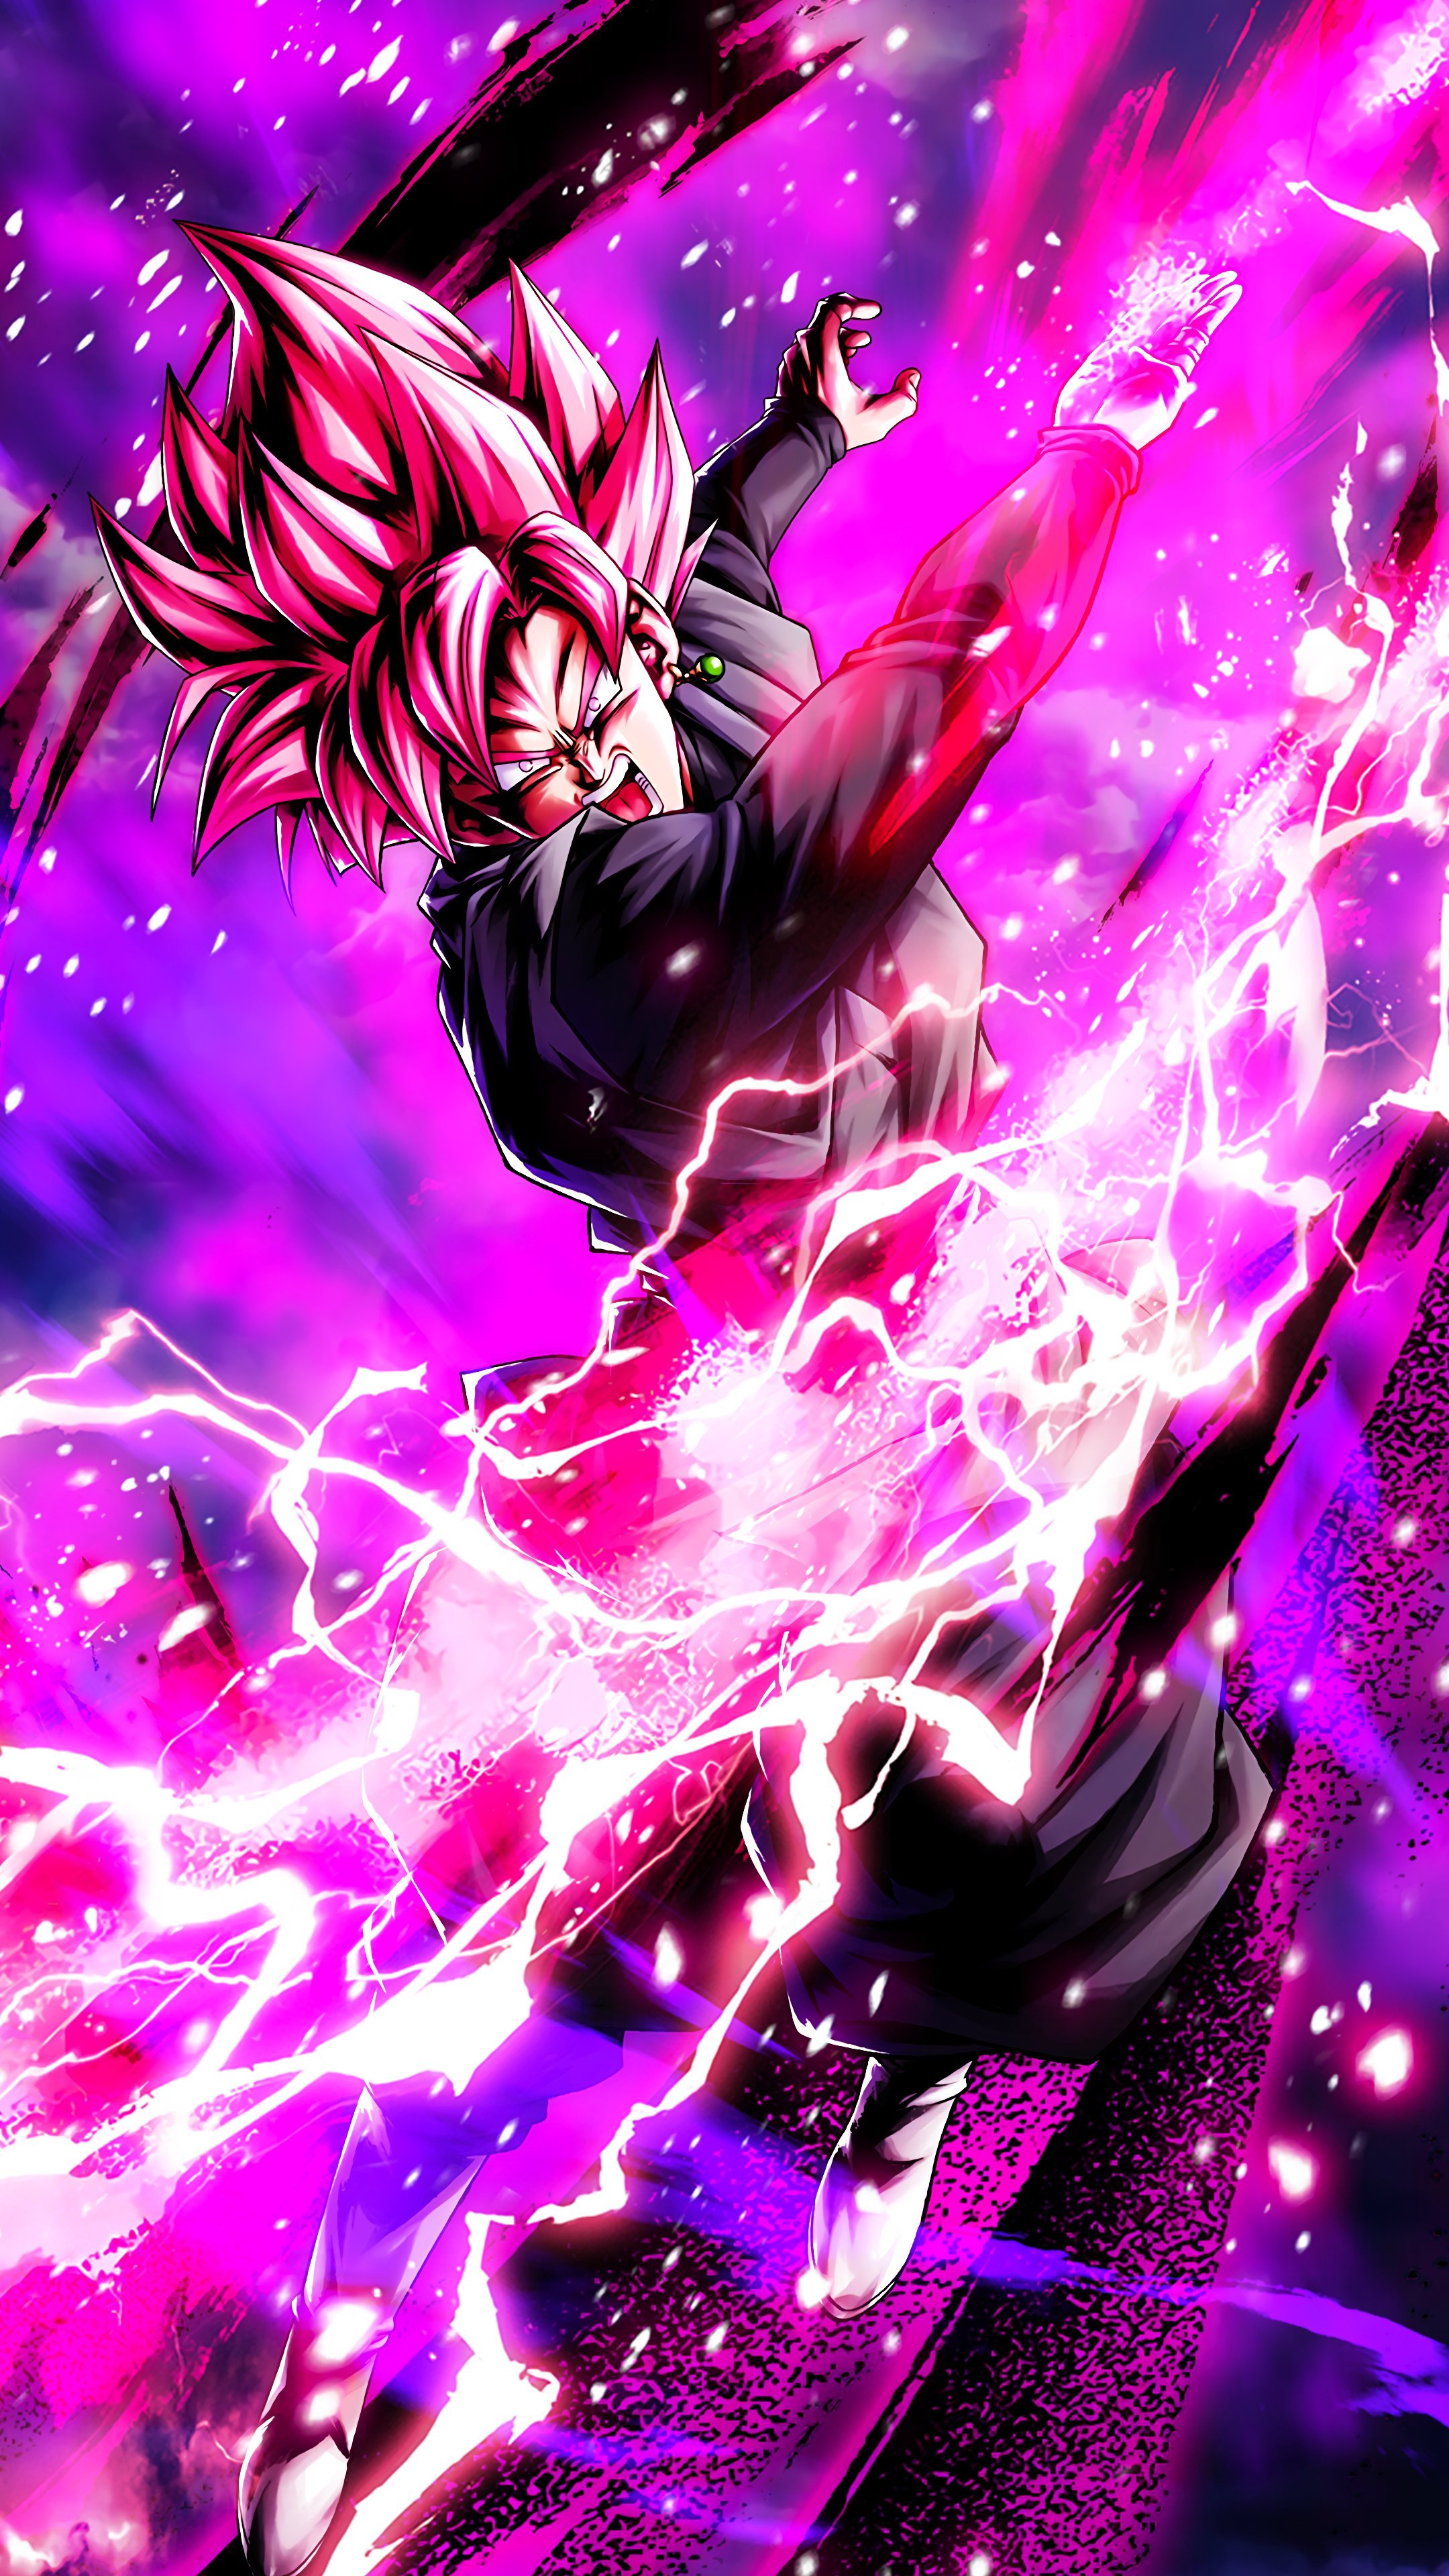 Goku Black Rose Poster  Black Goku Rose Wallpaper Iphone HD Png Download   1024x10241568687  PngFind